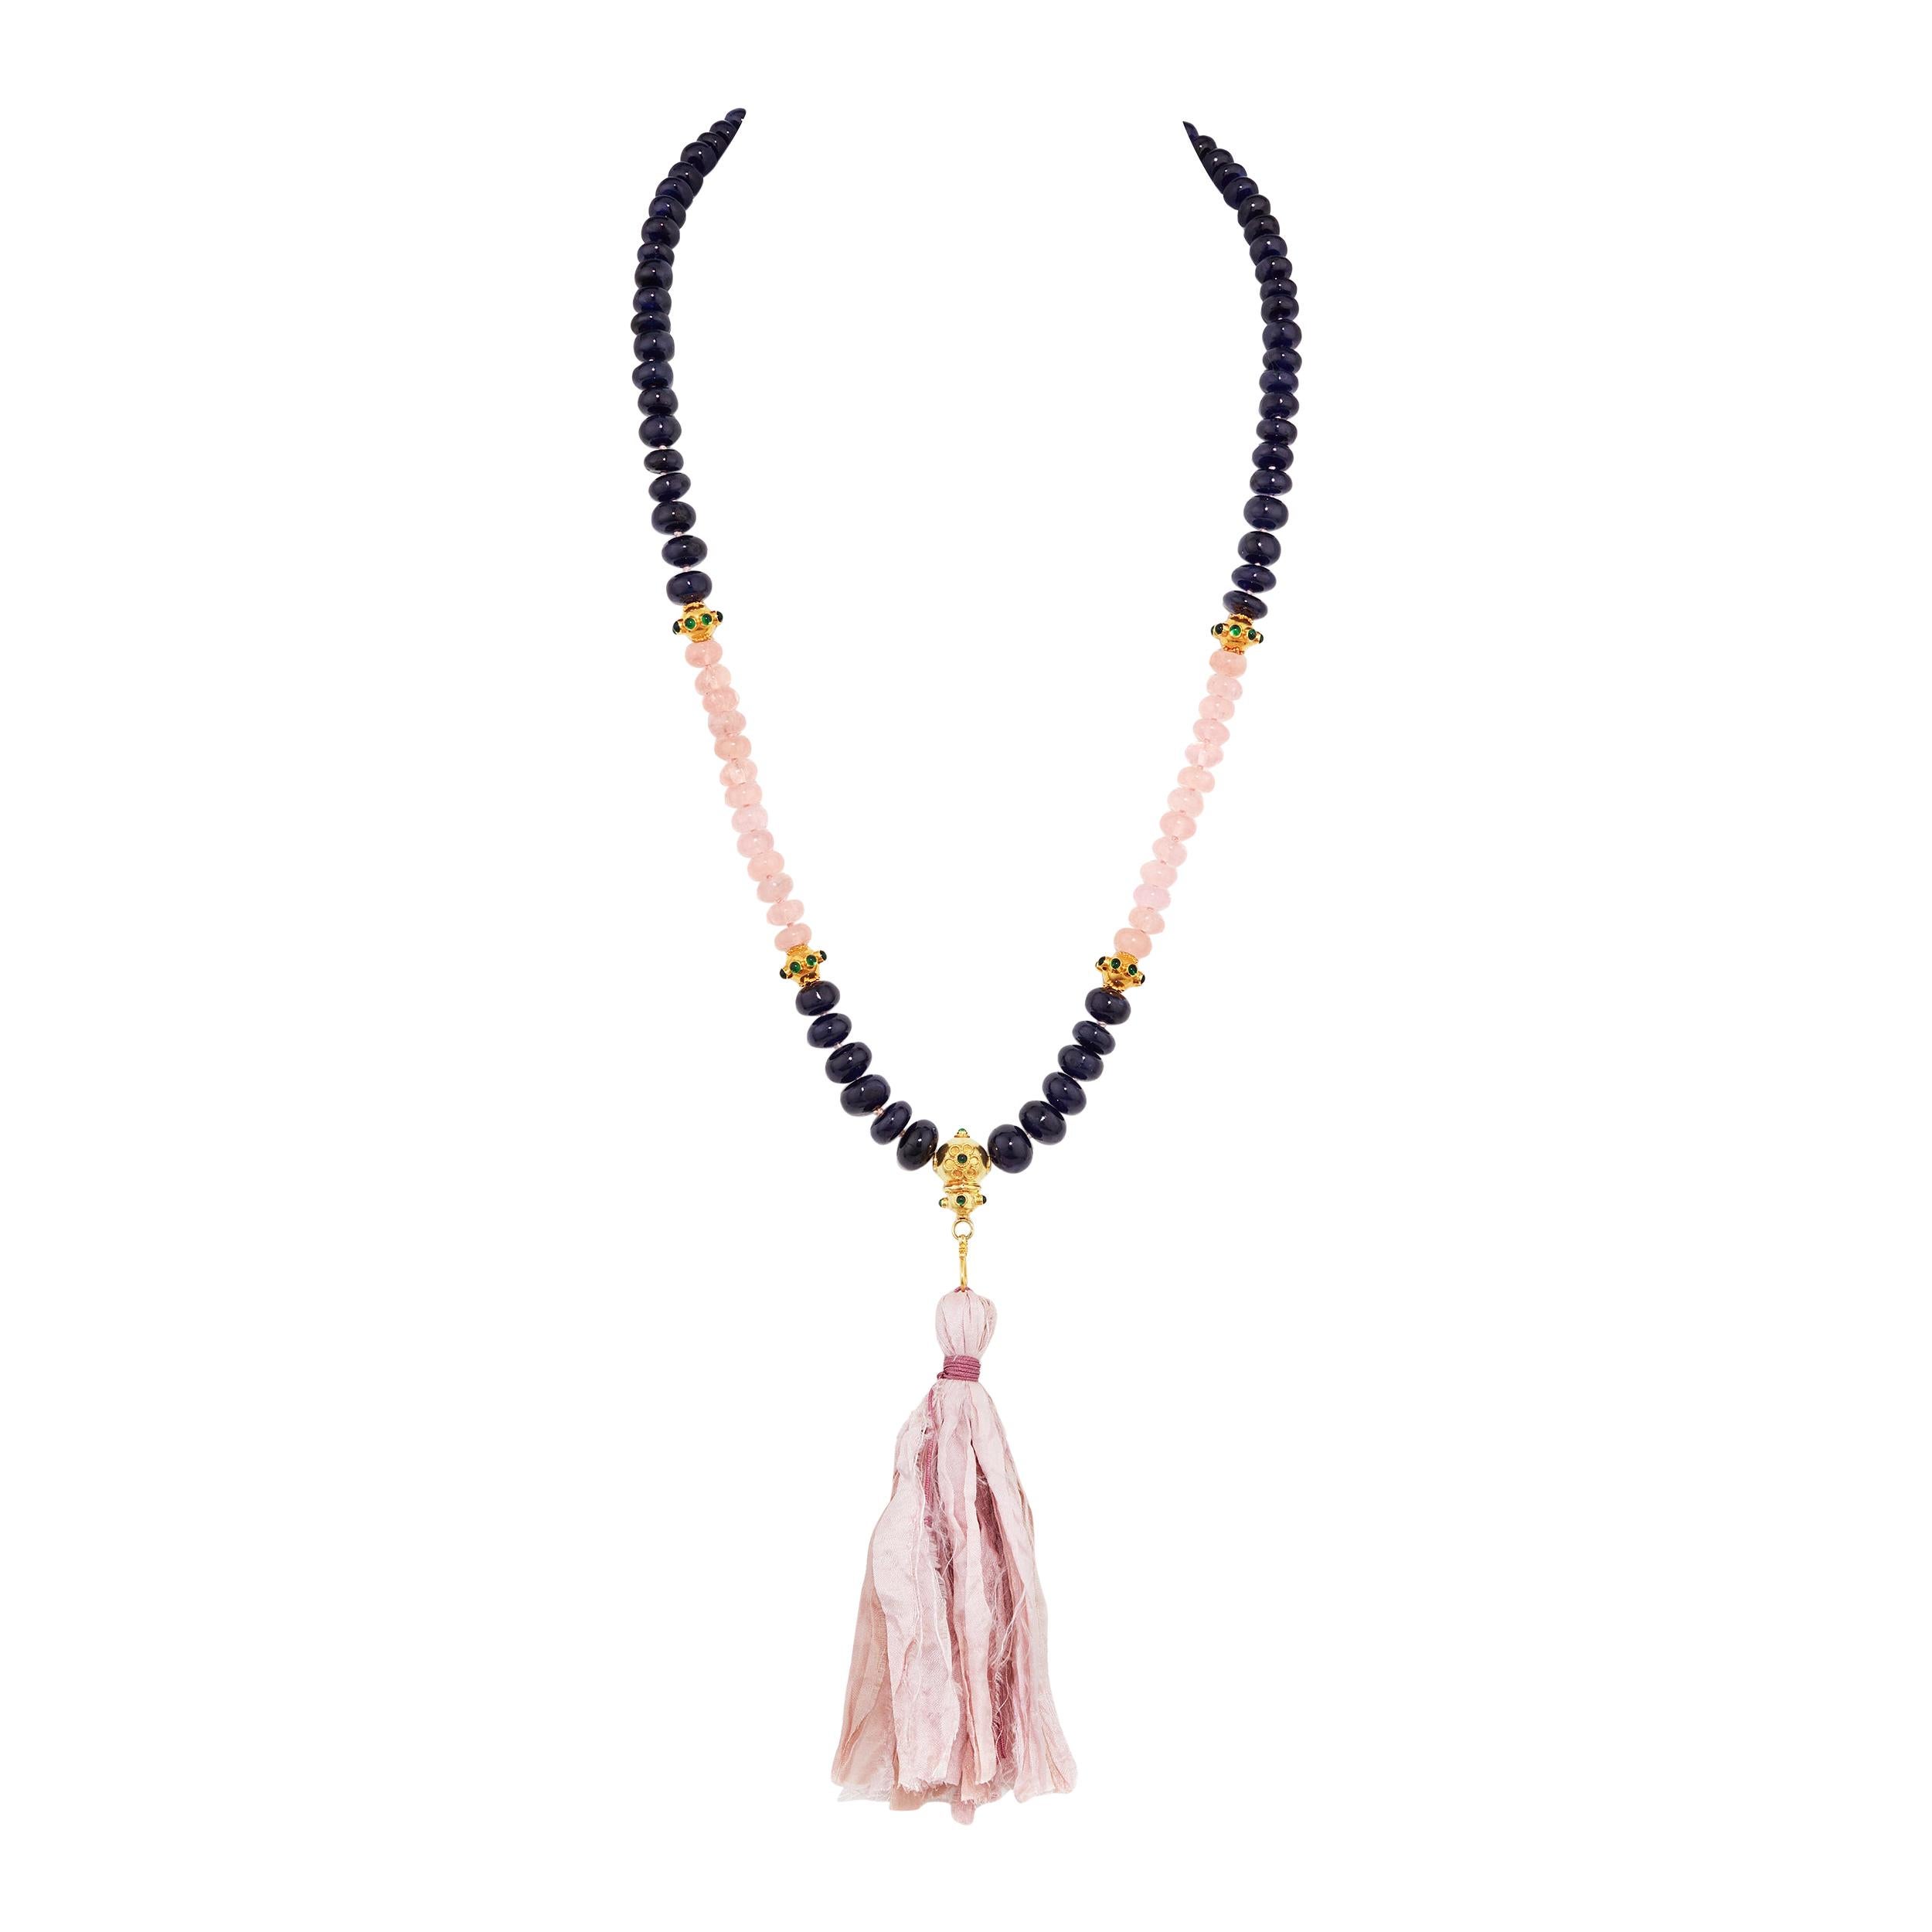 Sapphire and Morganite Mala / Meditation / Prayer Necklace in 18 Karat Gold